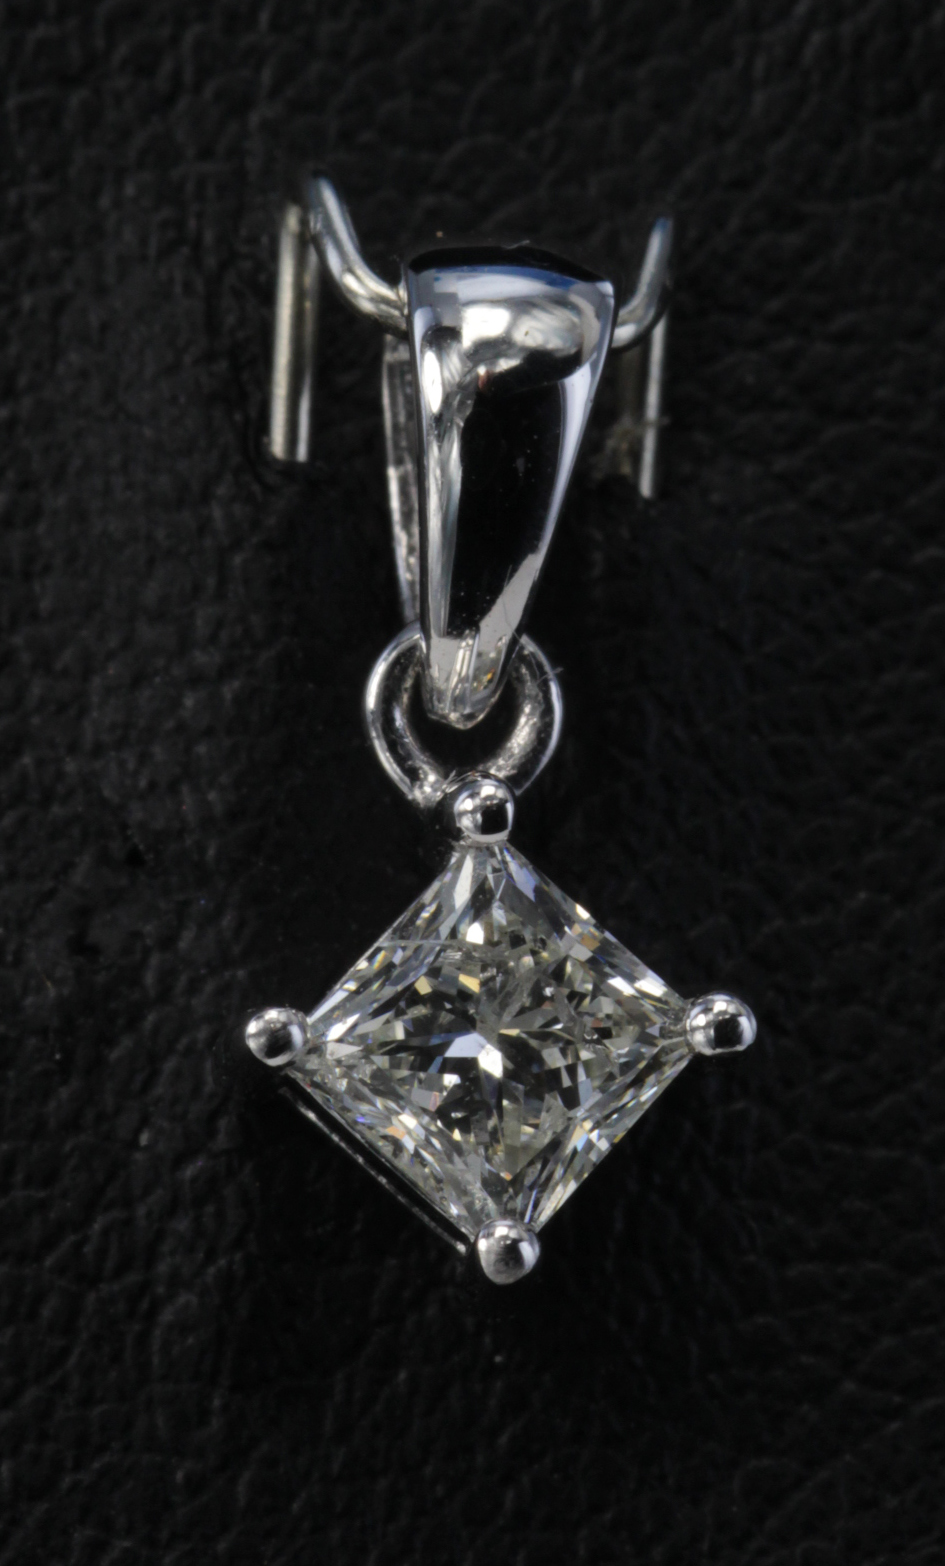 18ct white gold princess cut 0.50ct diamond single stone pendant, weight 1.0g - Image 2 of 3